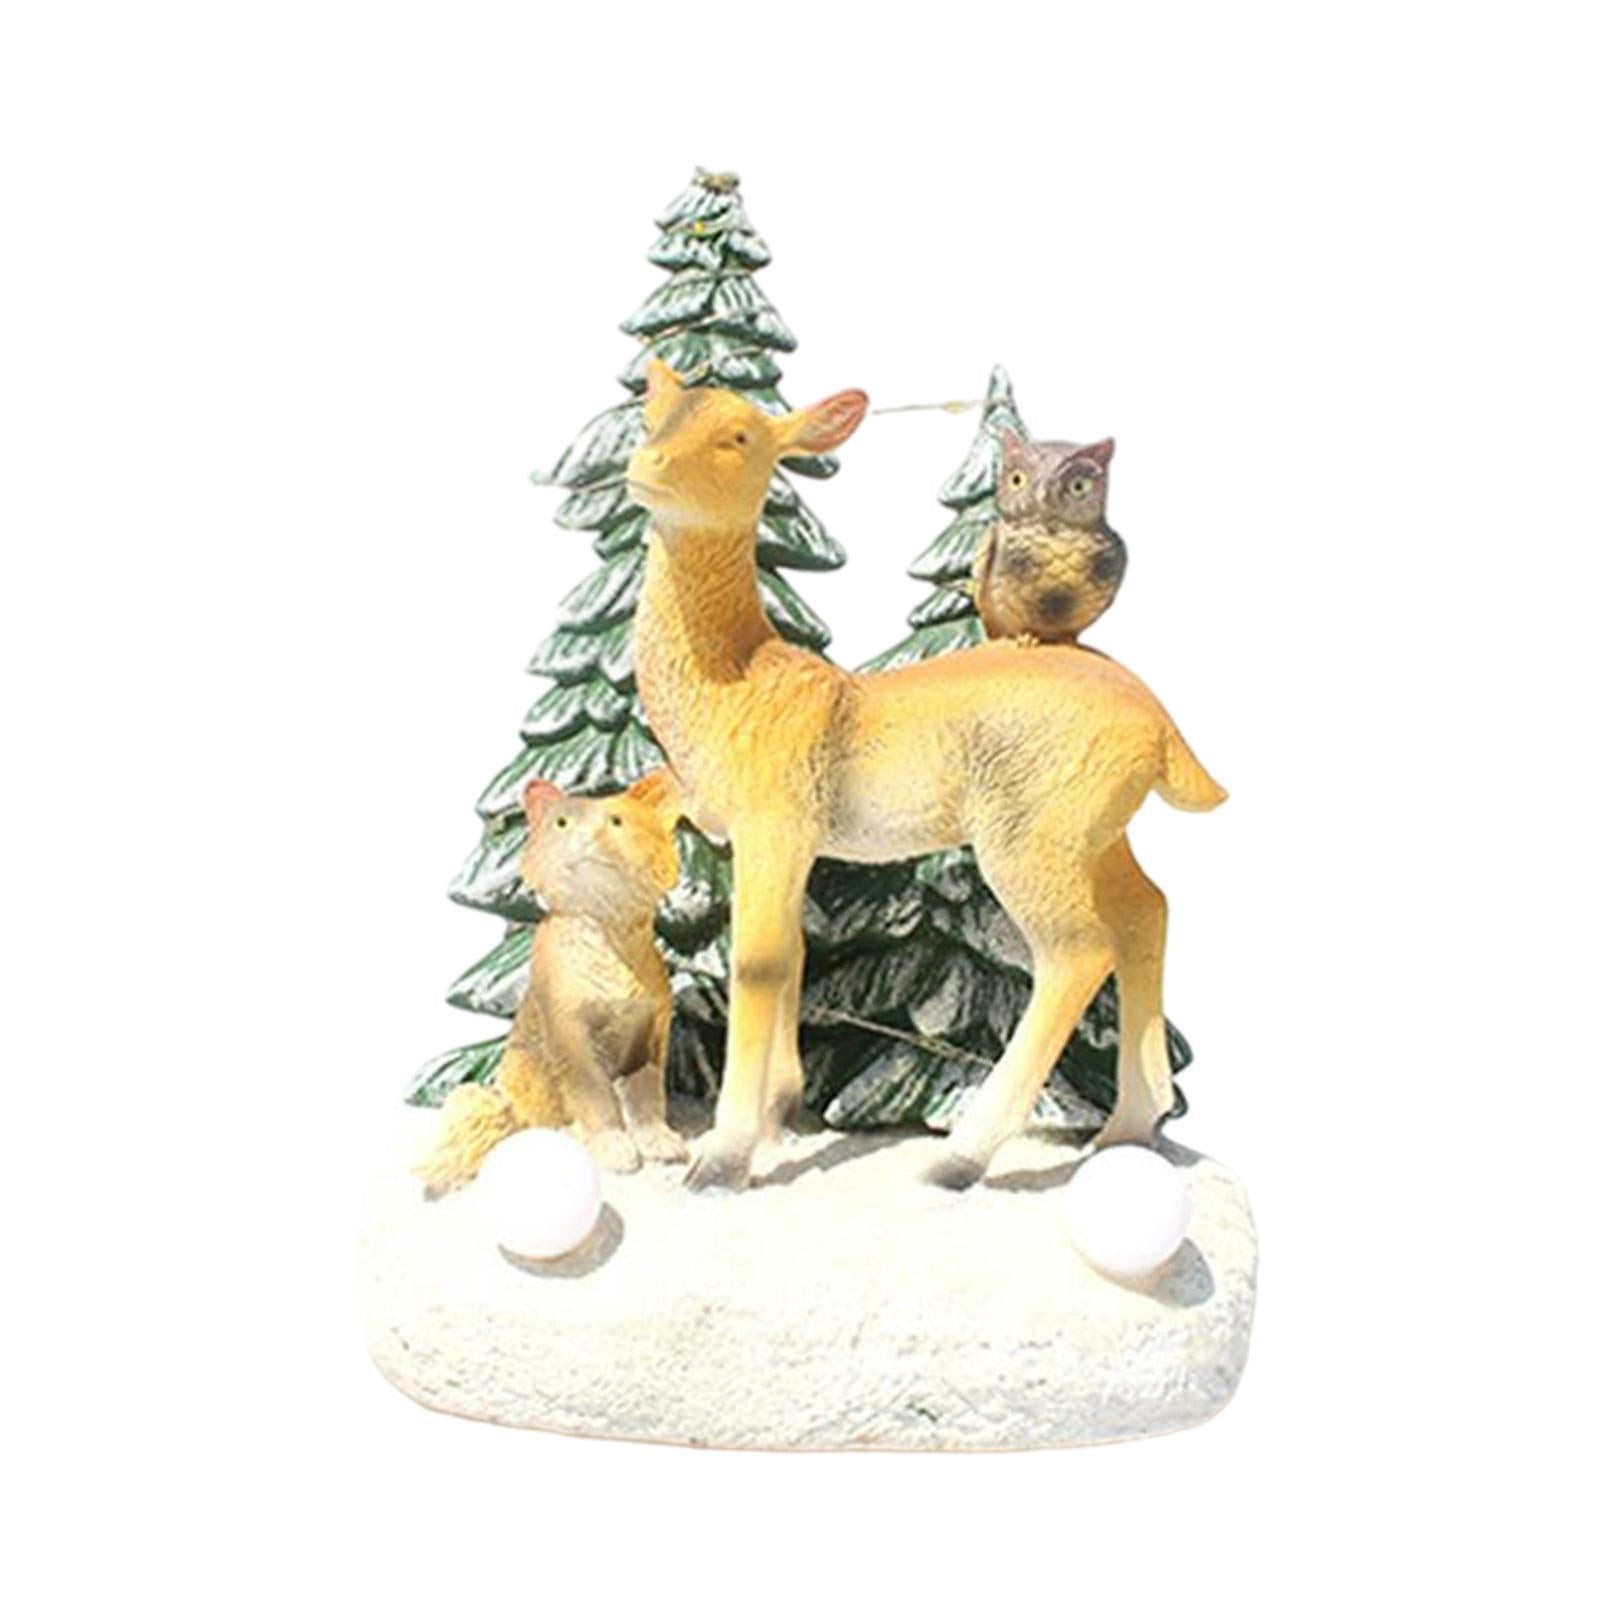 Lighted Christmas Miniature Figurines Toys DIY Accessories Doll House Decor Reindeer